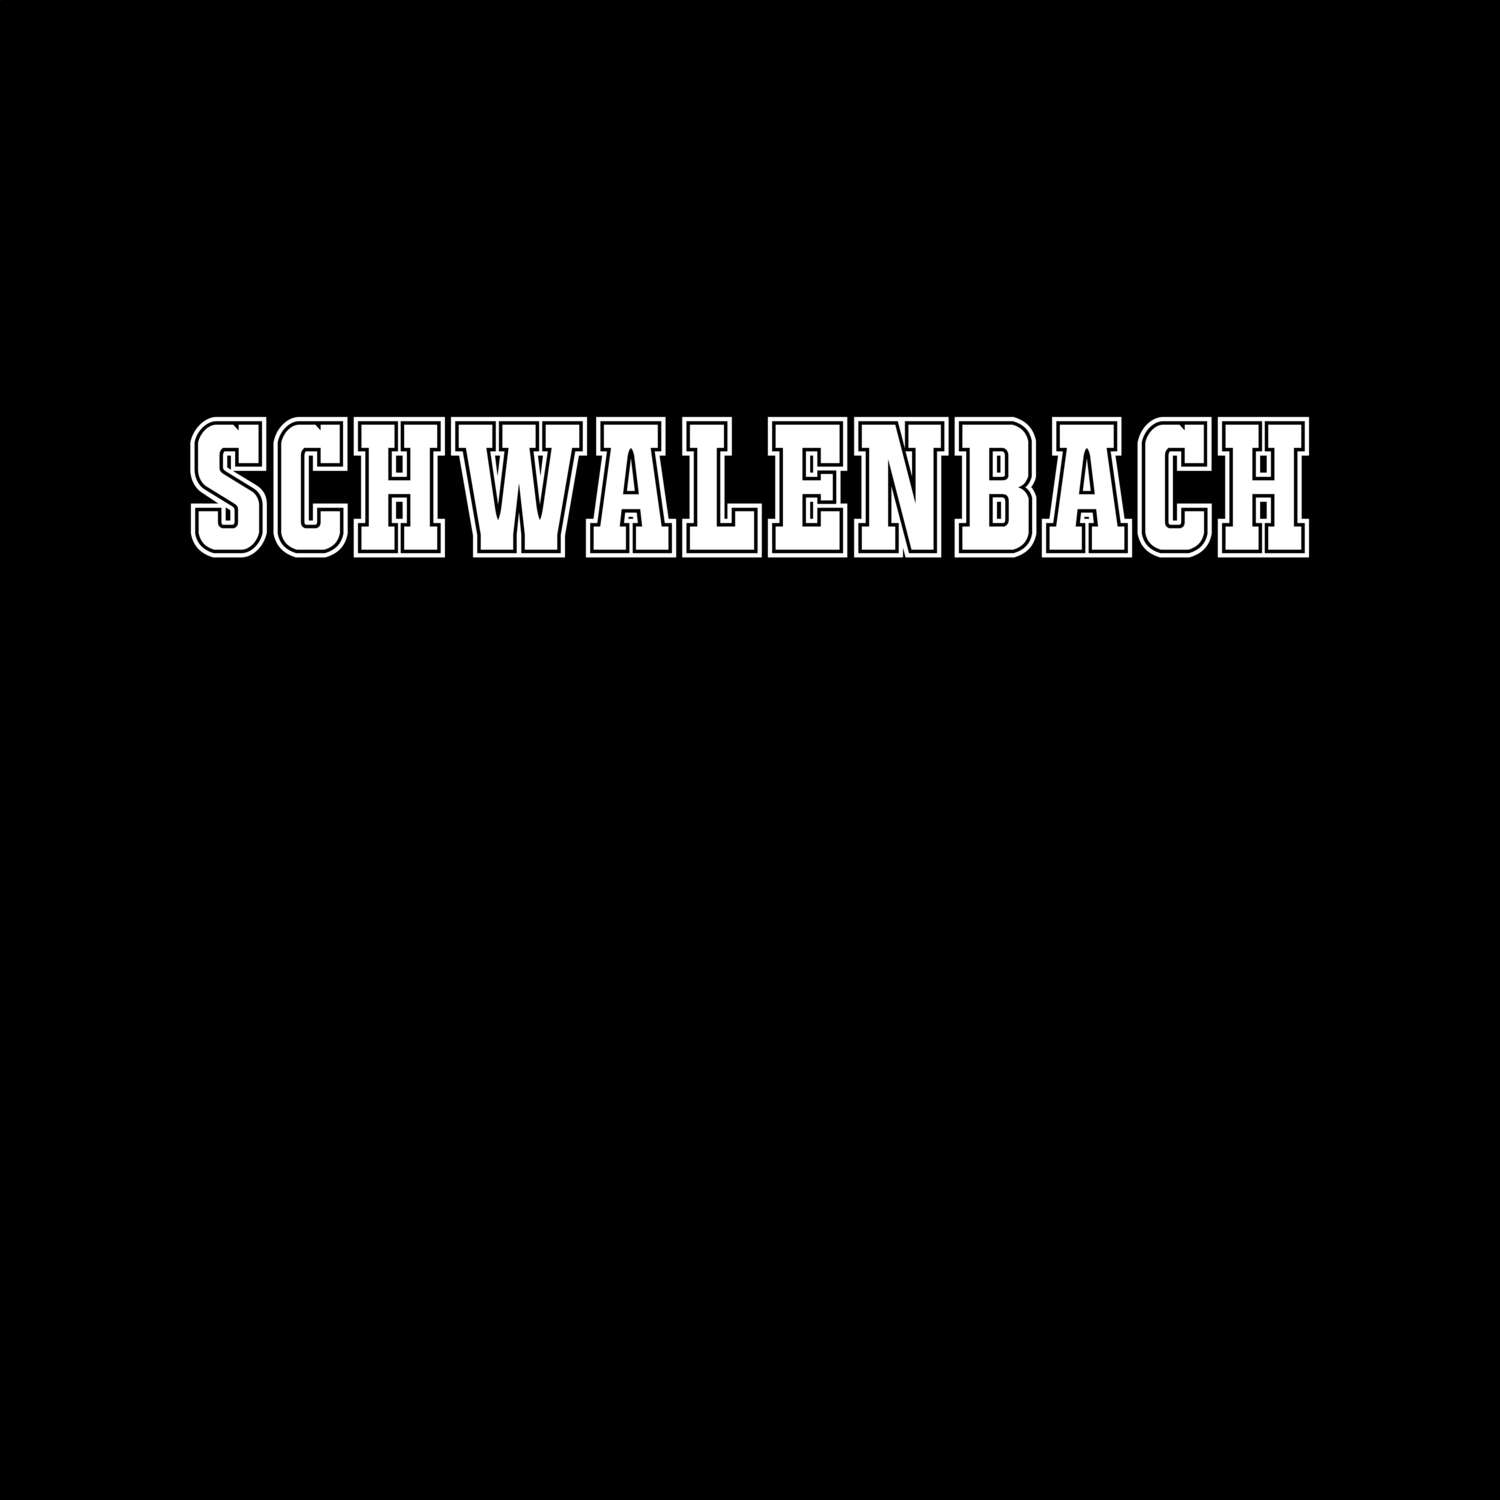 Schwalenbach T-Shirt »Classic«